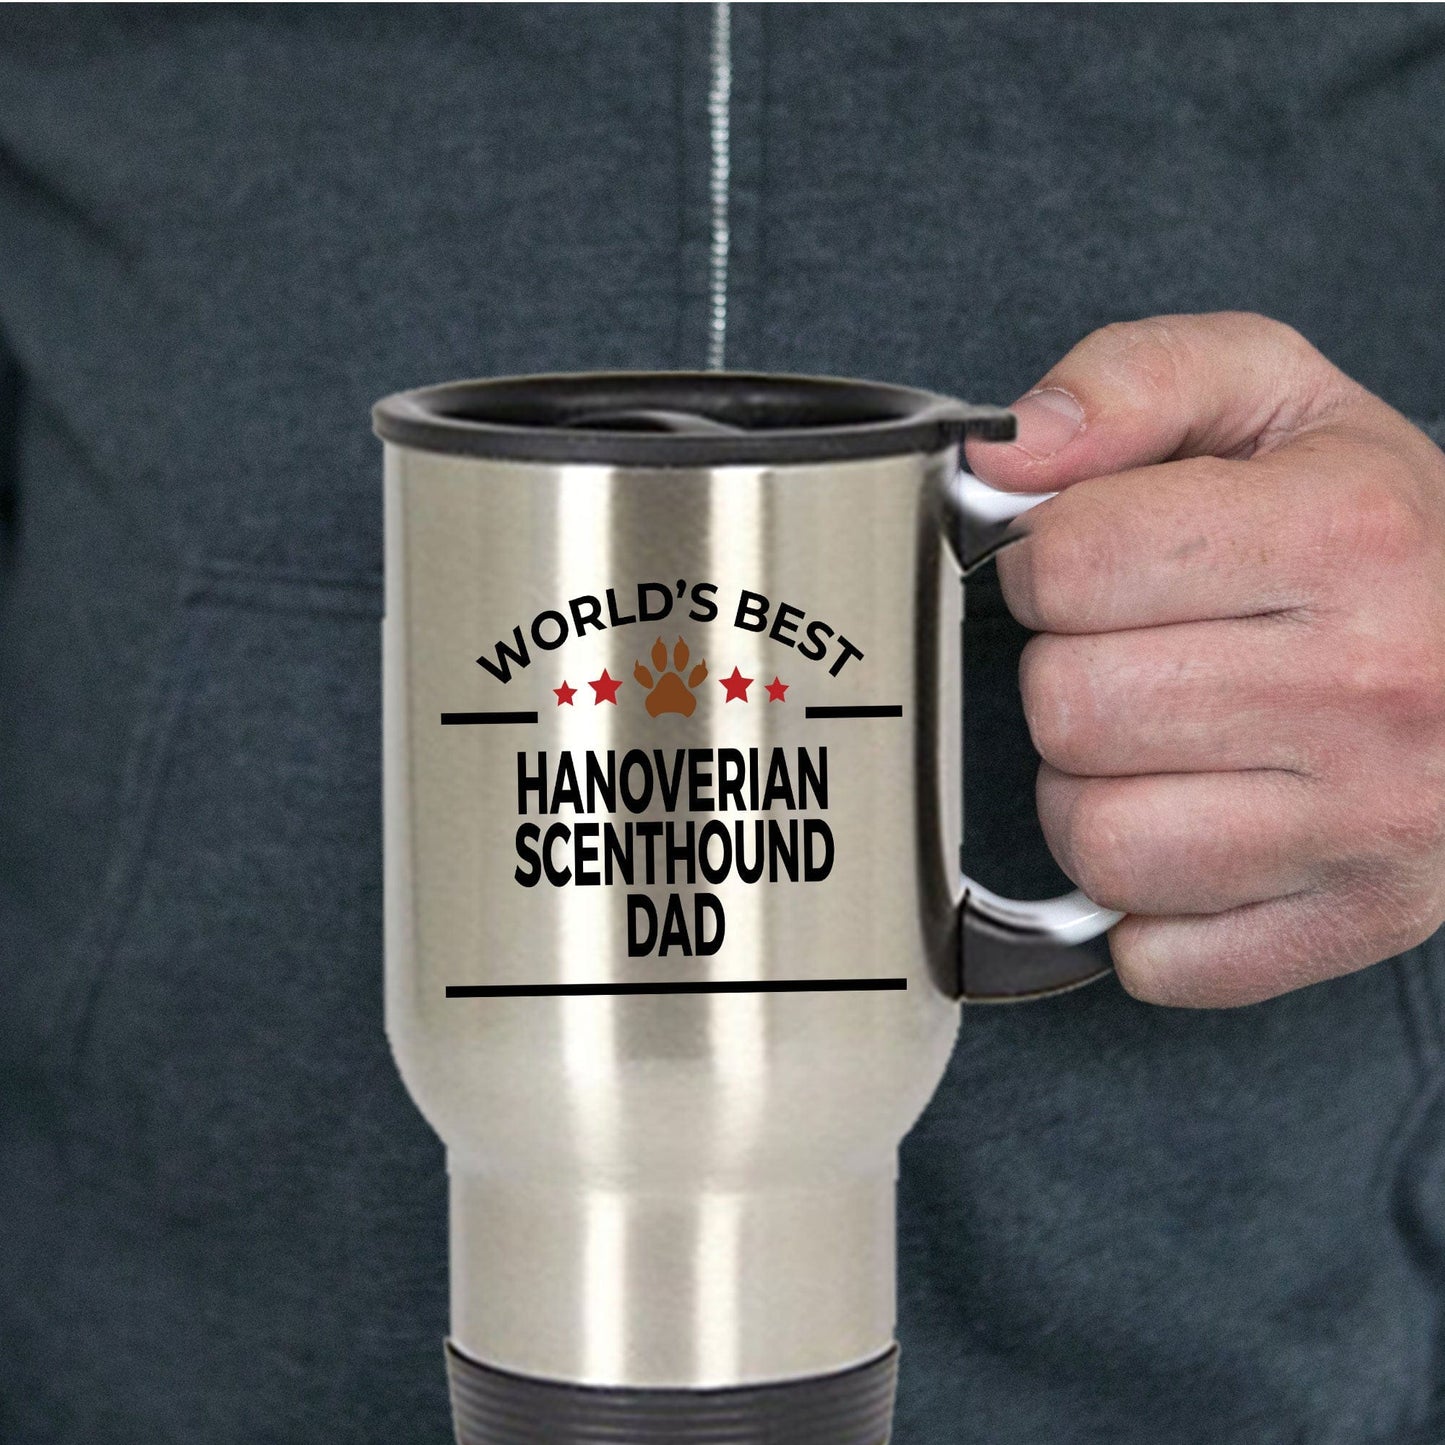 Hanoverian Scenthound Dog Dad Travel Mug